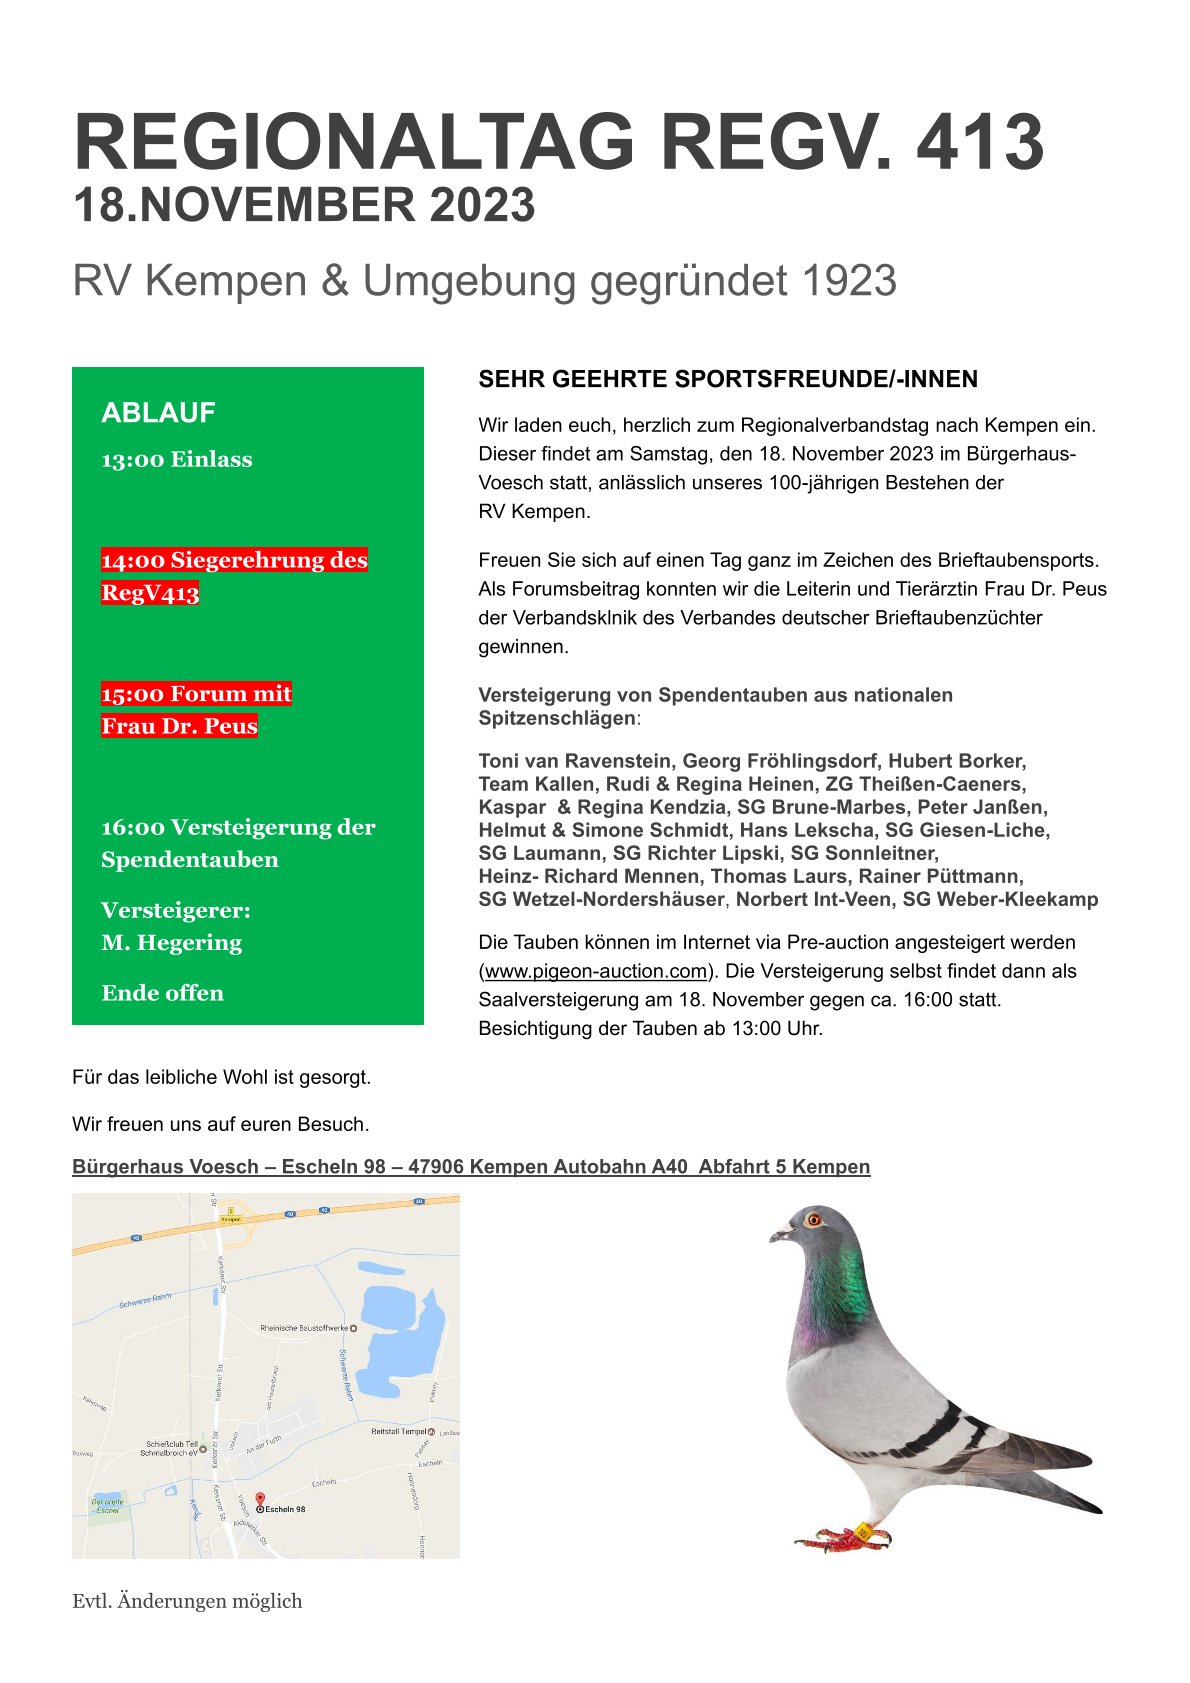 Regionaltag REGV413 2023